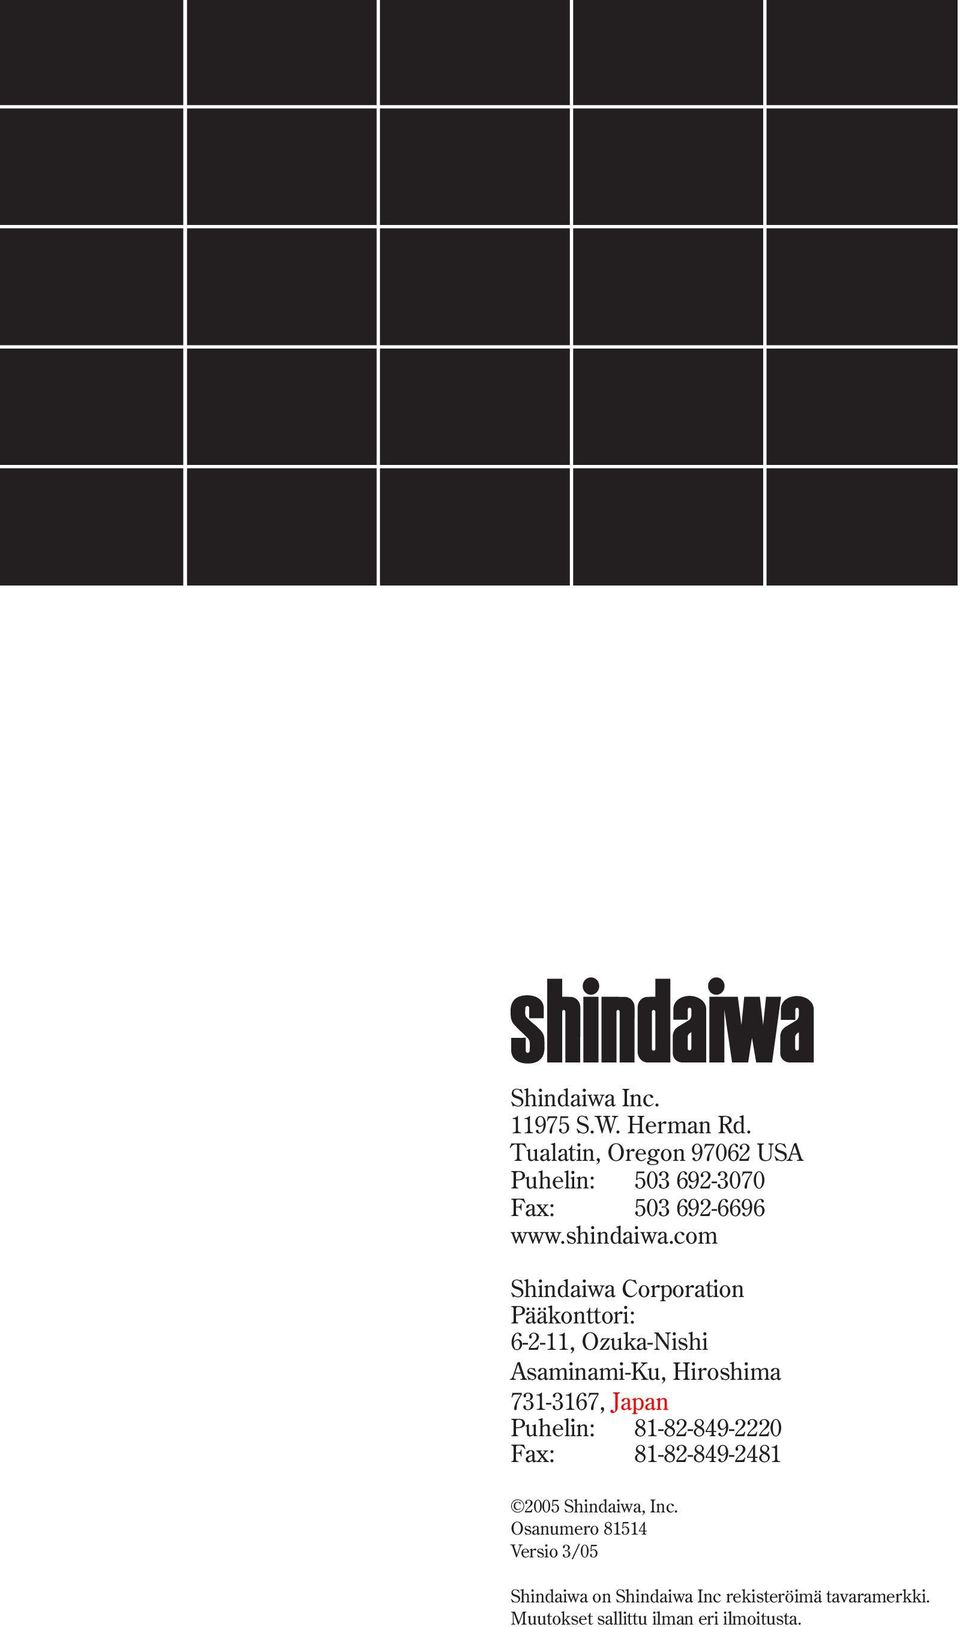 com Shindaiwa Corporation Pääkonttori: 6-2-11, Ozuka-Nishi Asaminami-Ku, Hiroshima 731-3167, Japan